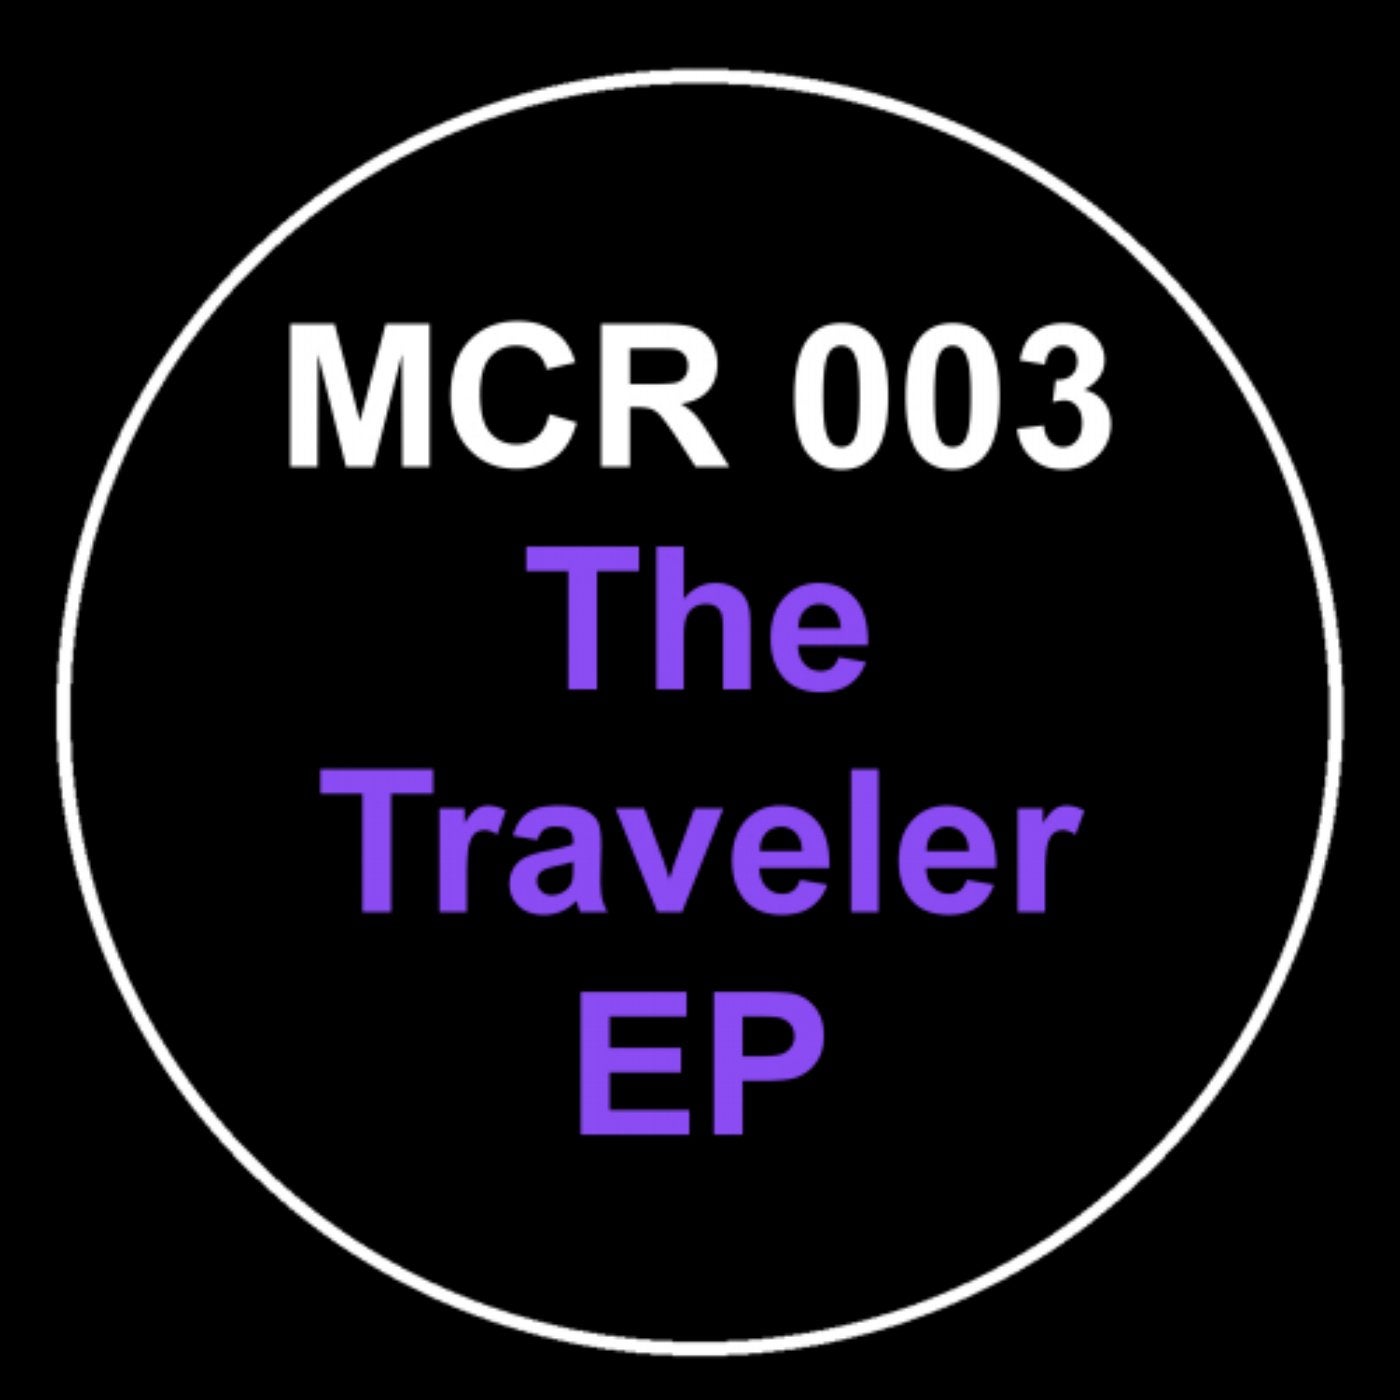 The Traveler EP